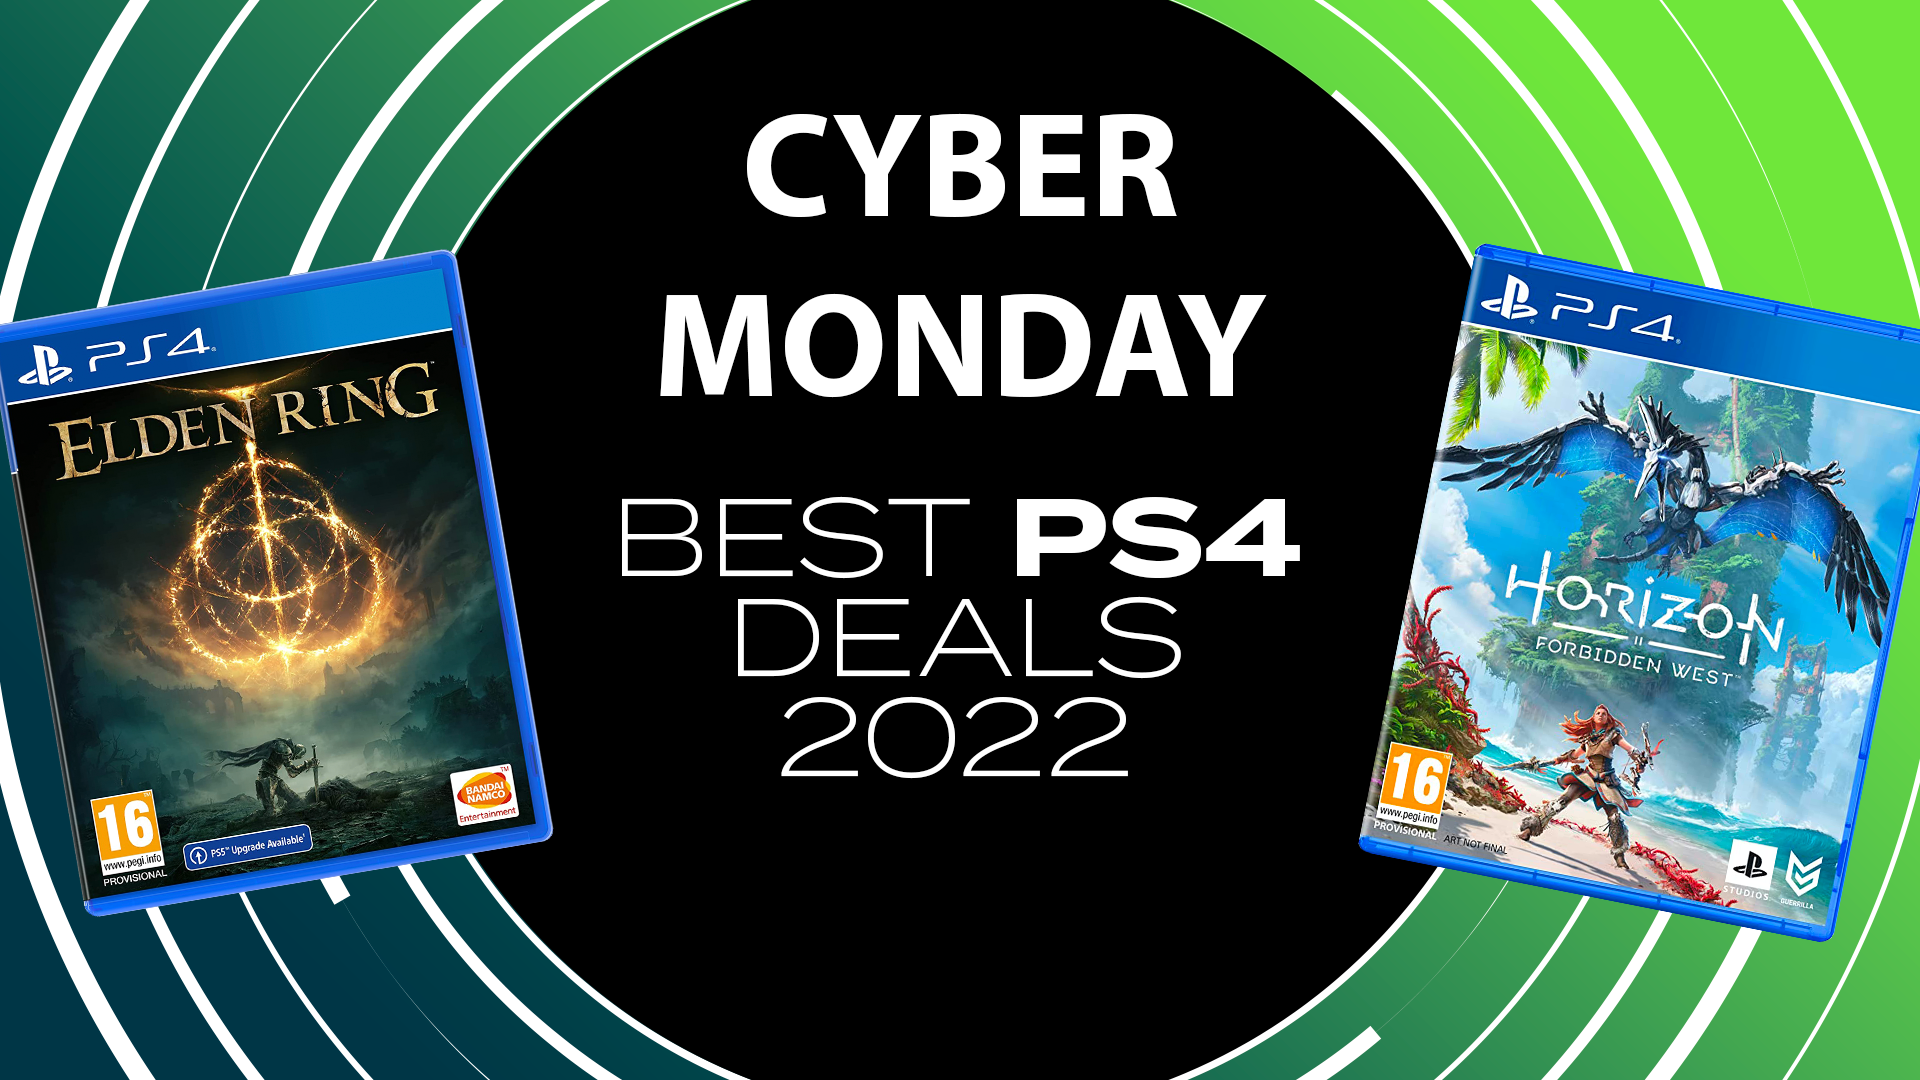 Cyber Monday PS4 Deals